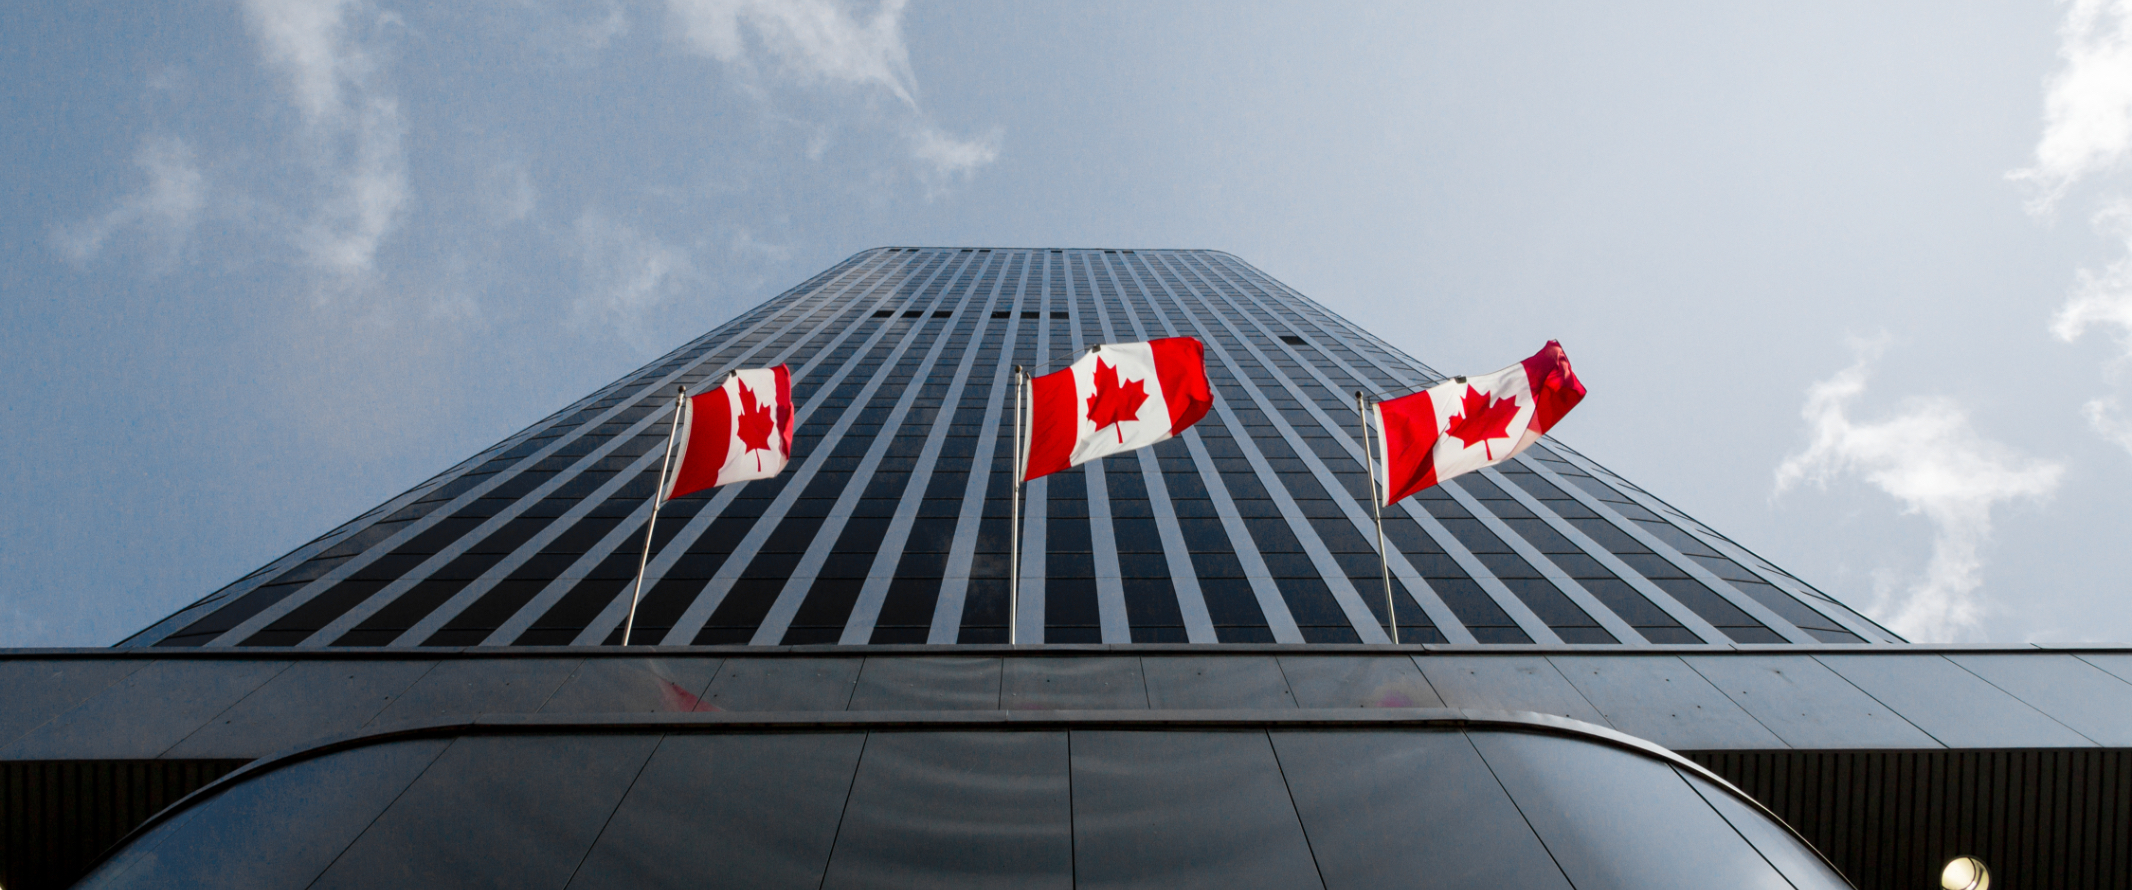 Canadian flag on building.